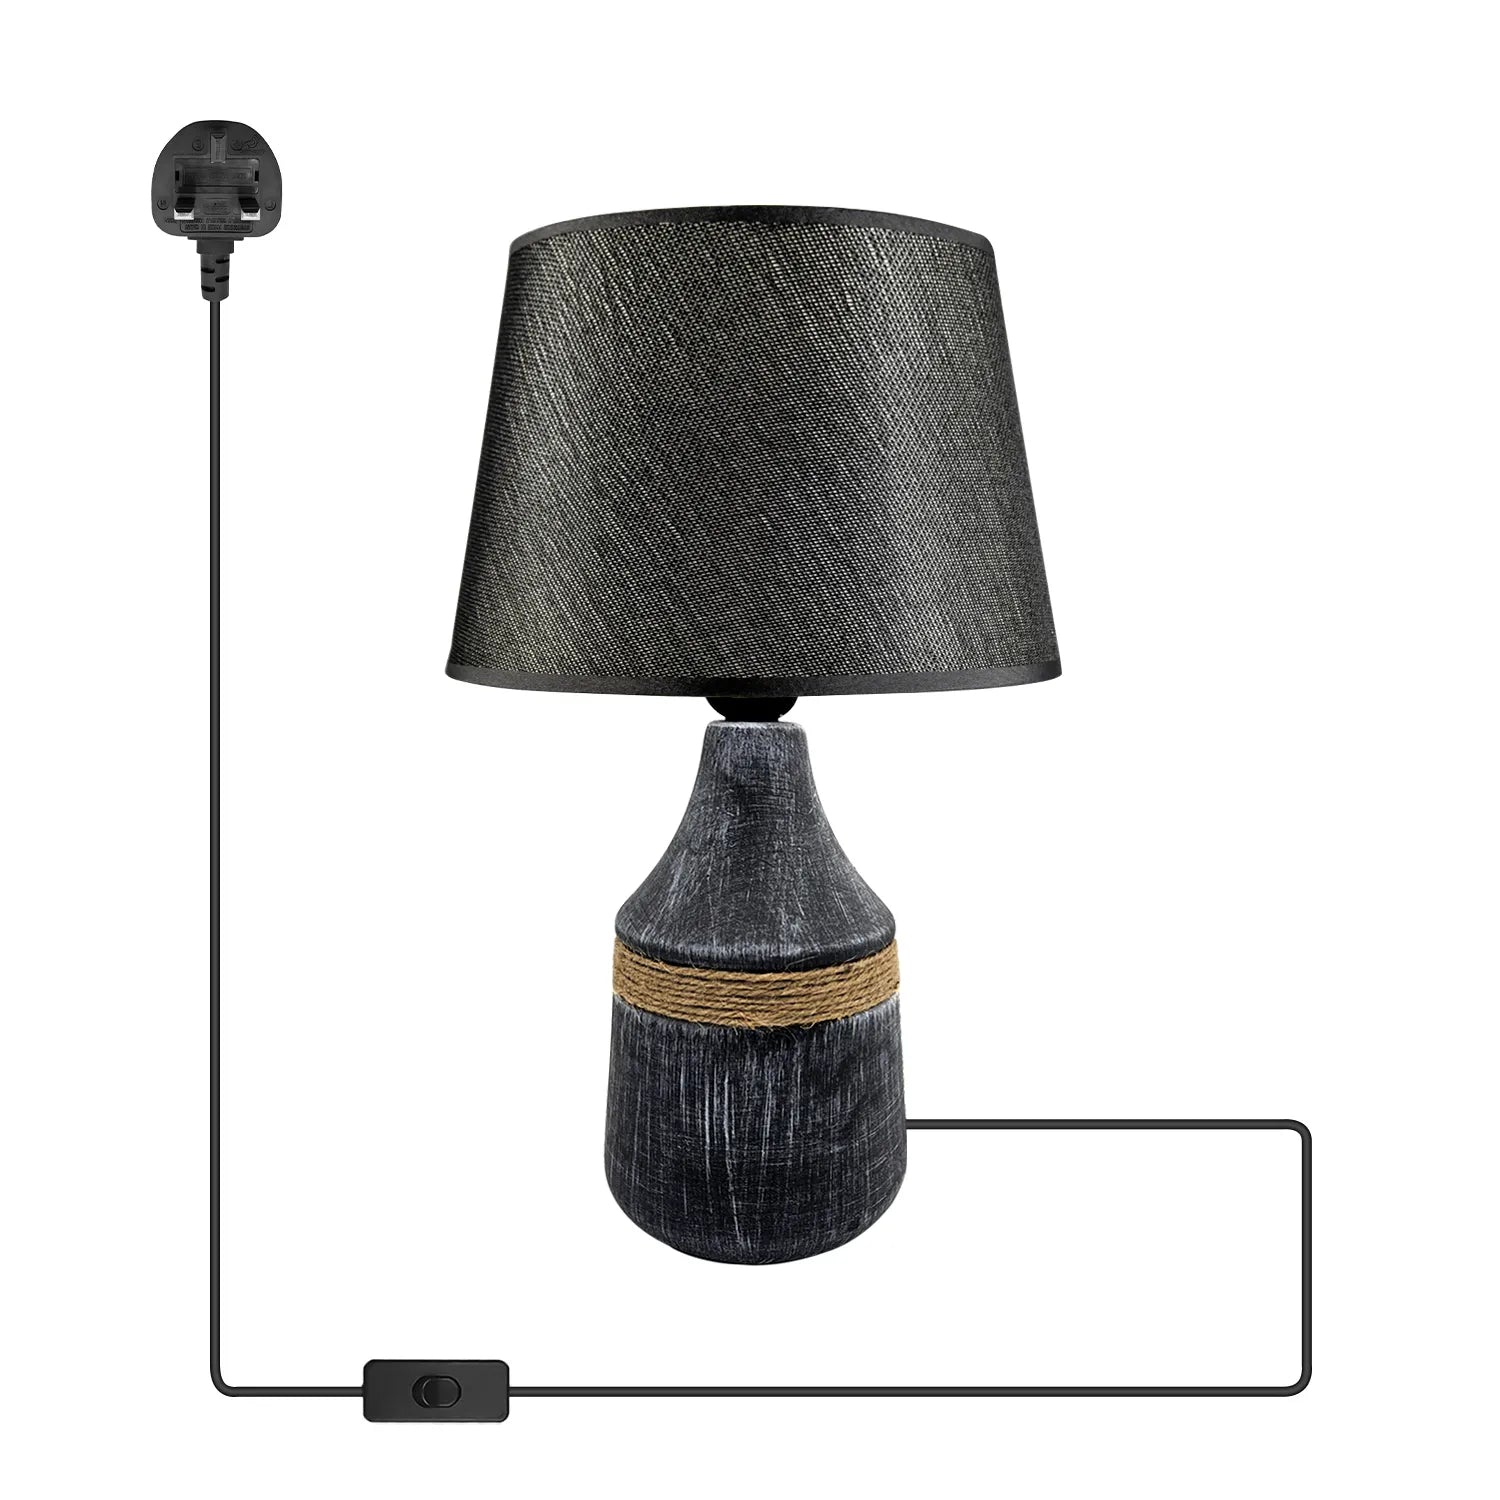 plug in Table lamp ceramic Lamp Base  1 pin Plug in Light